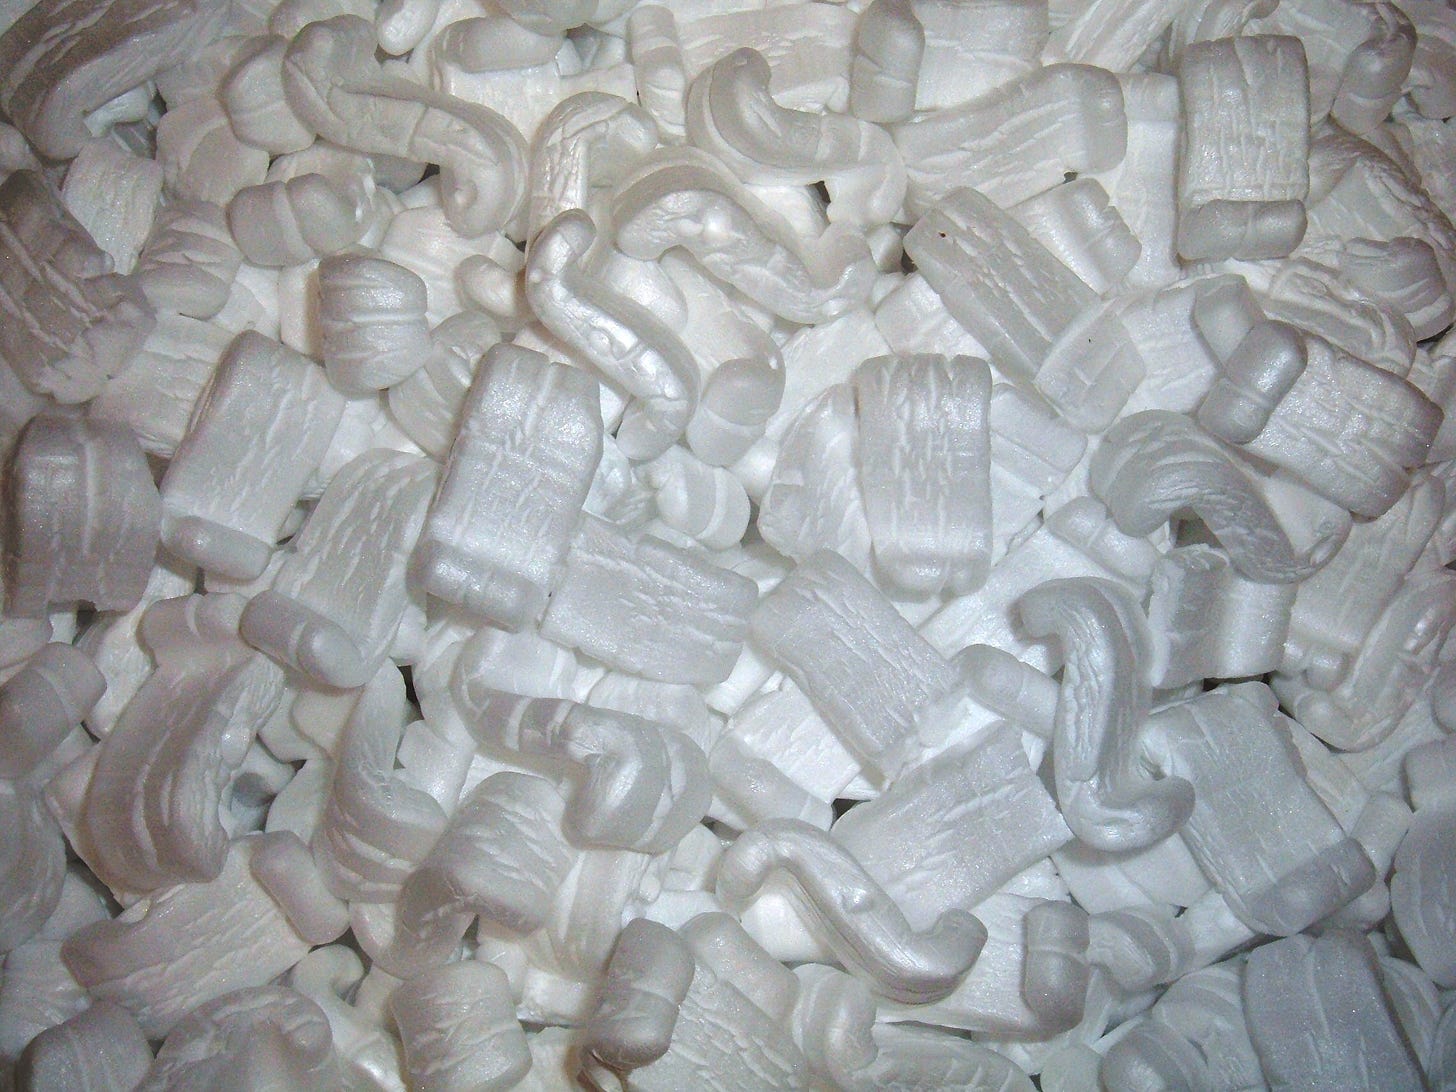 File:Styrofoam peanuts.JPG - Wikipedia